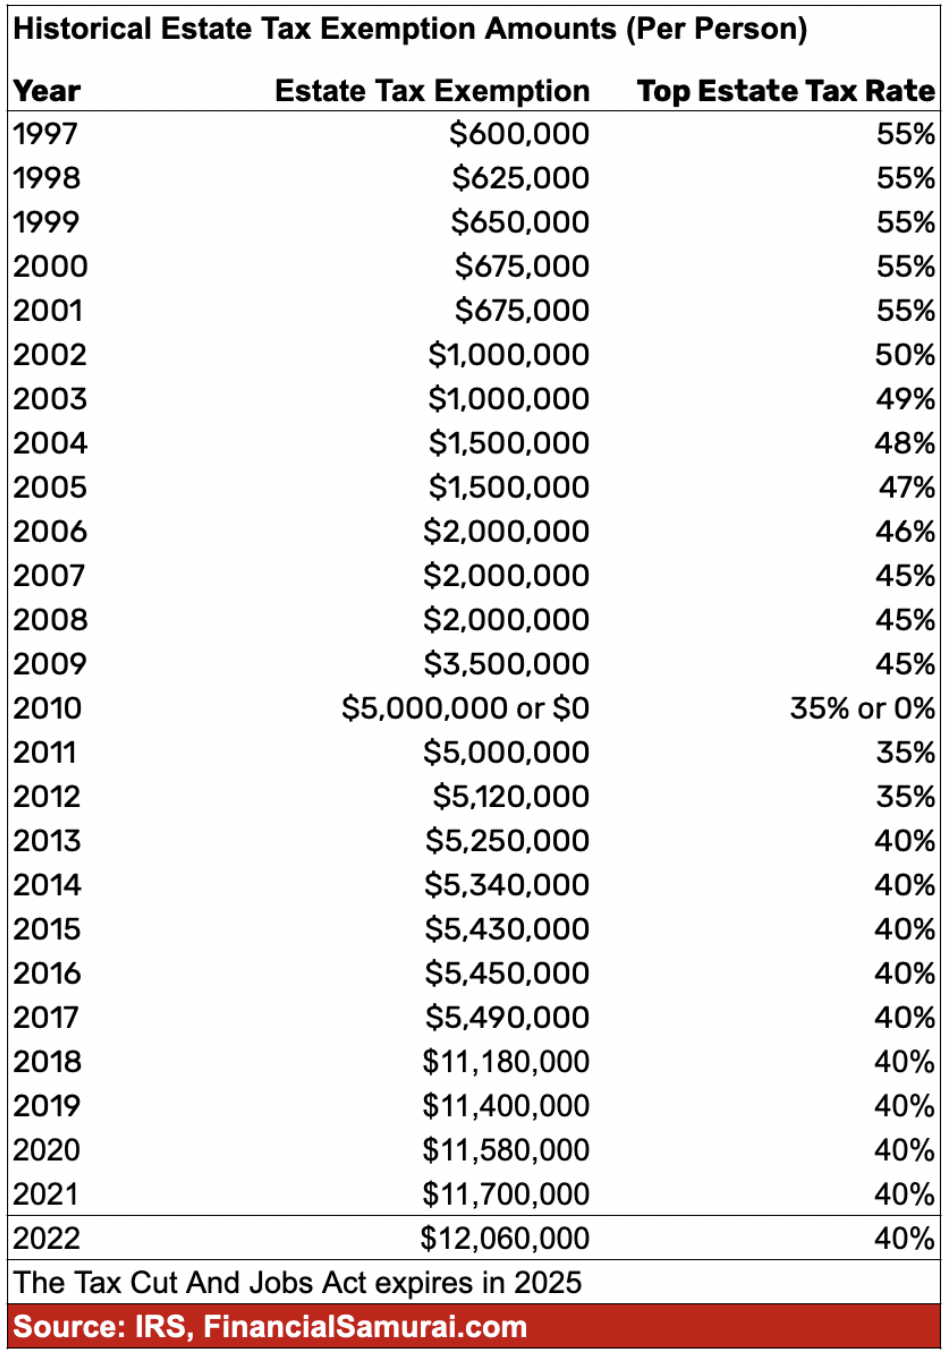 Historical estate tax exemption amounts per year through 2022